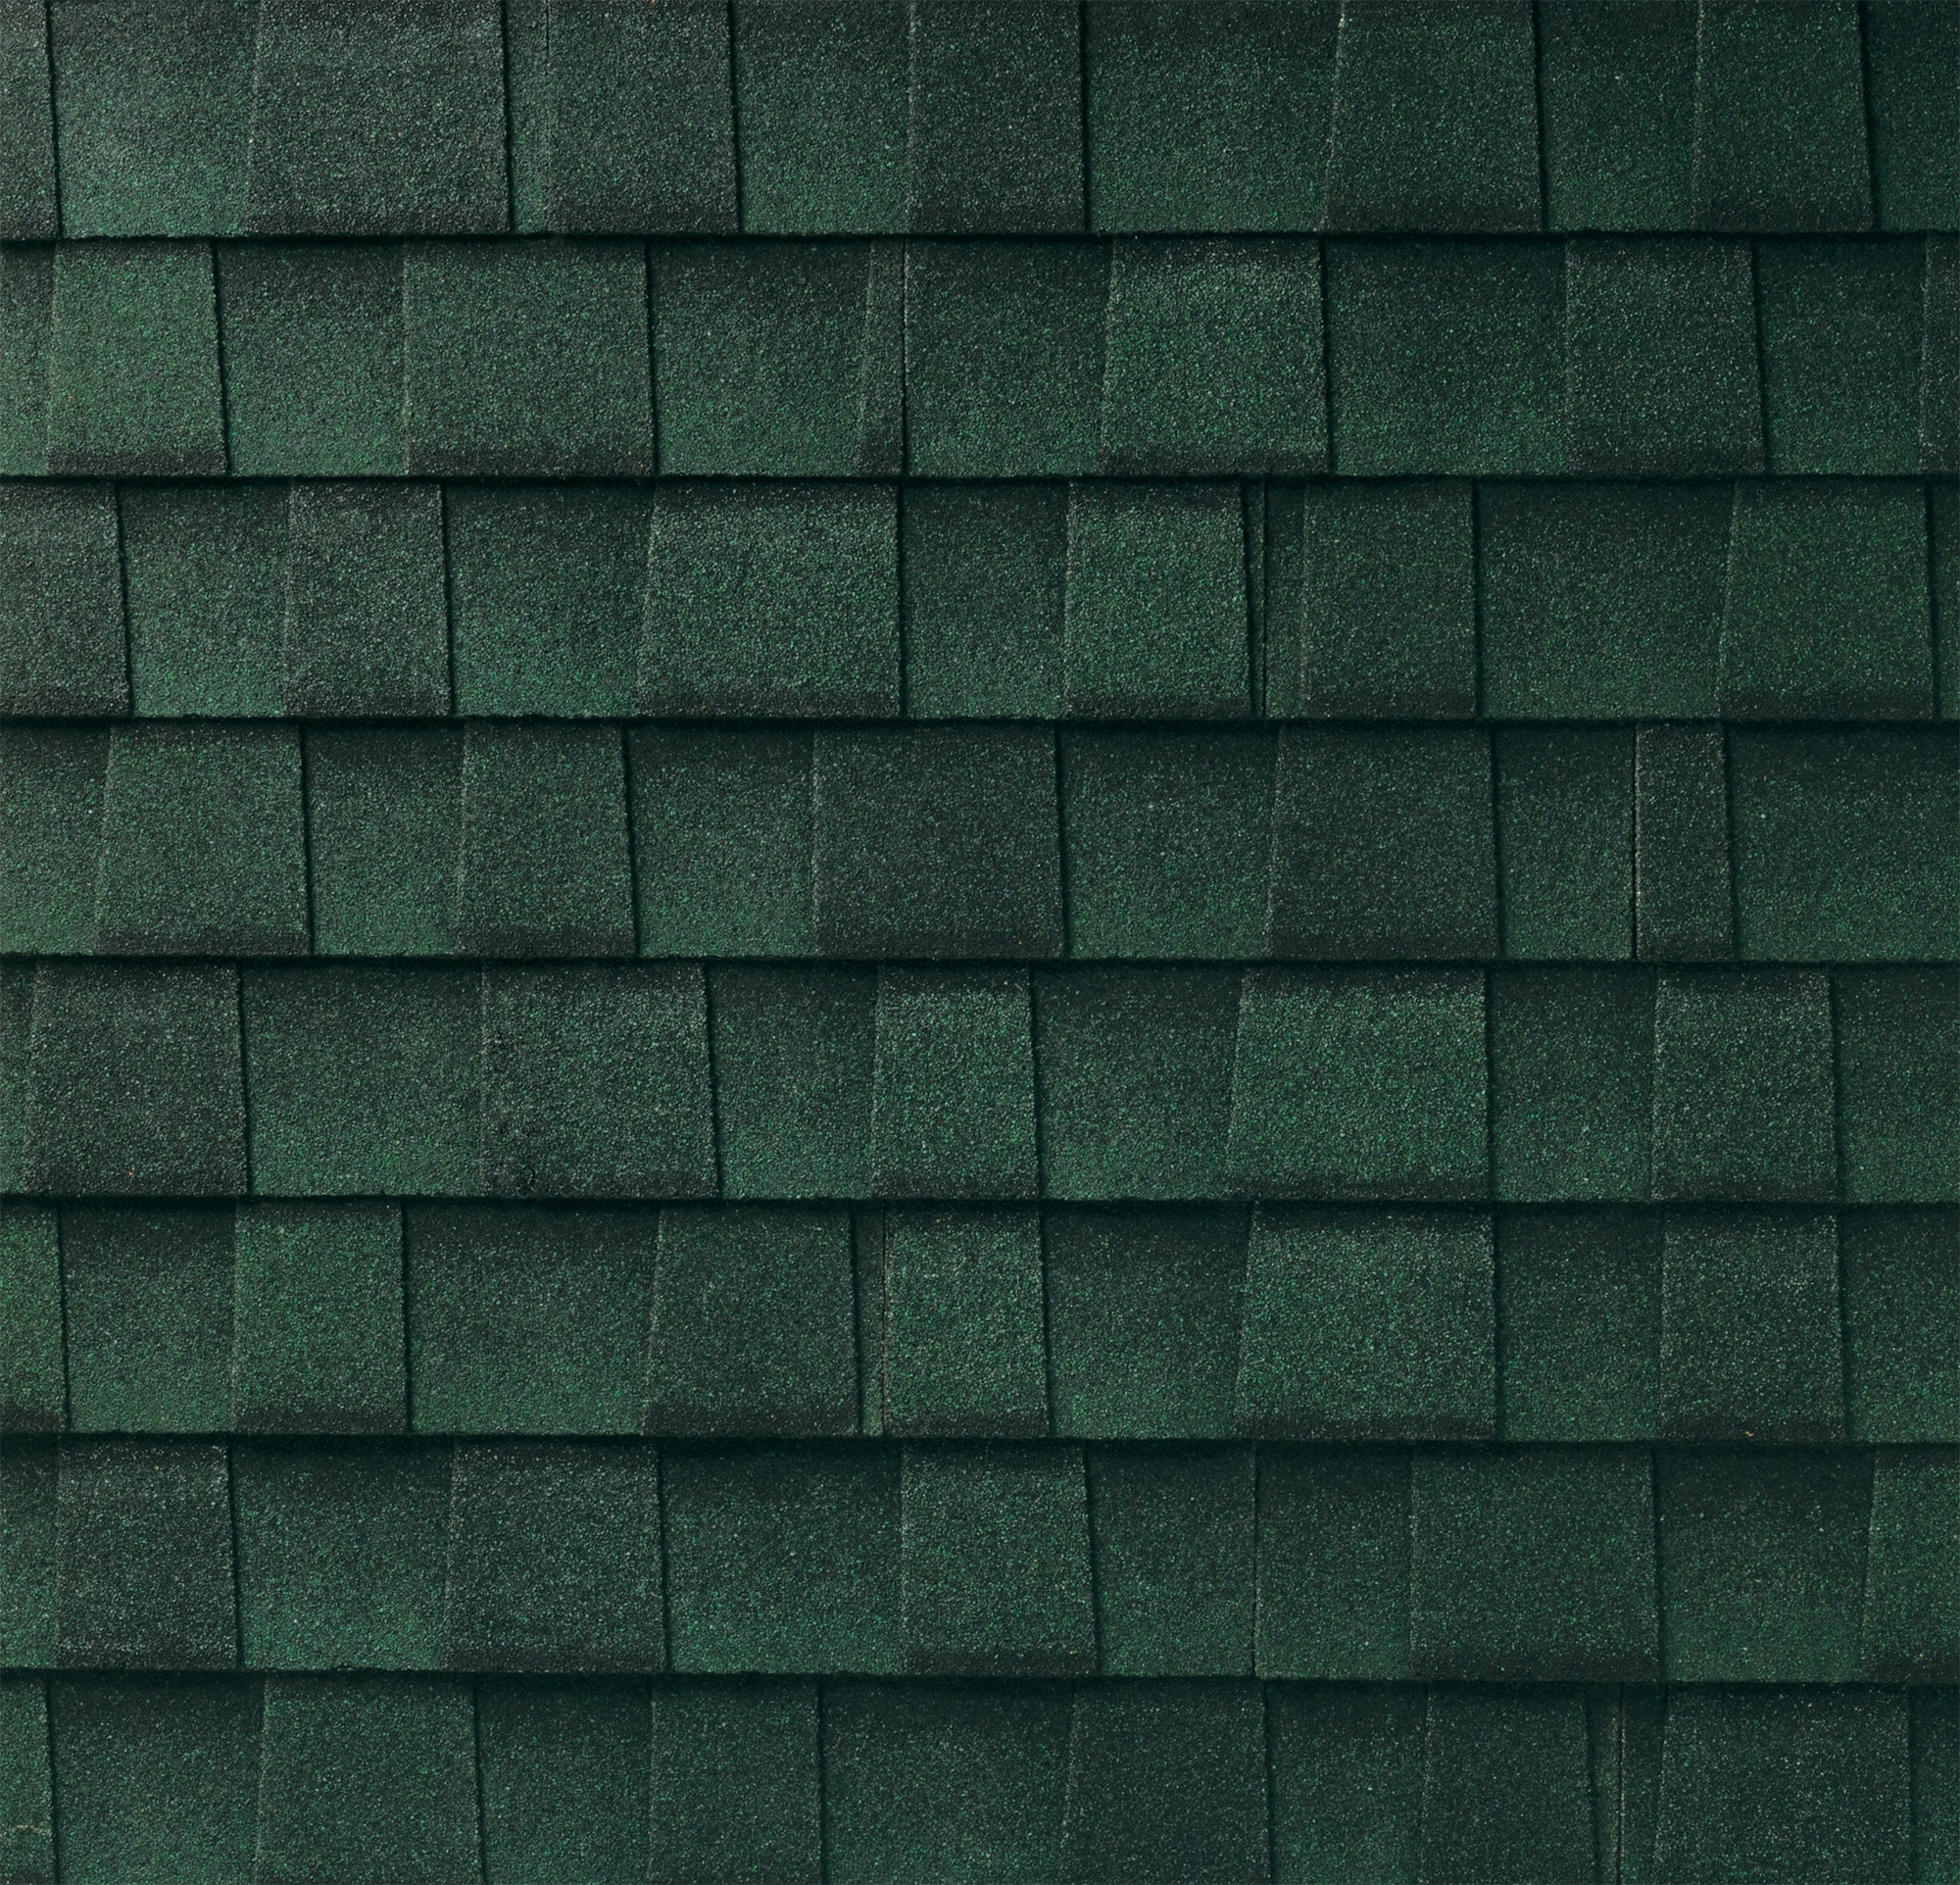 GAF Timberline Ultra hd Hunter Green Laminated Architectural Roof Shingles  (25-sq ft per Bundle) at